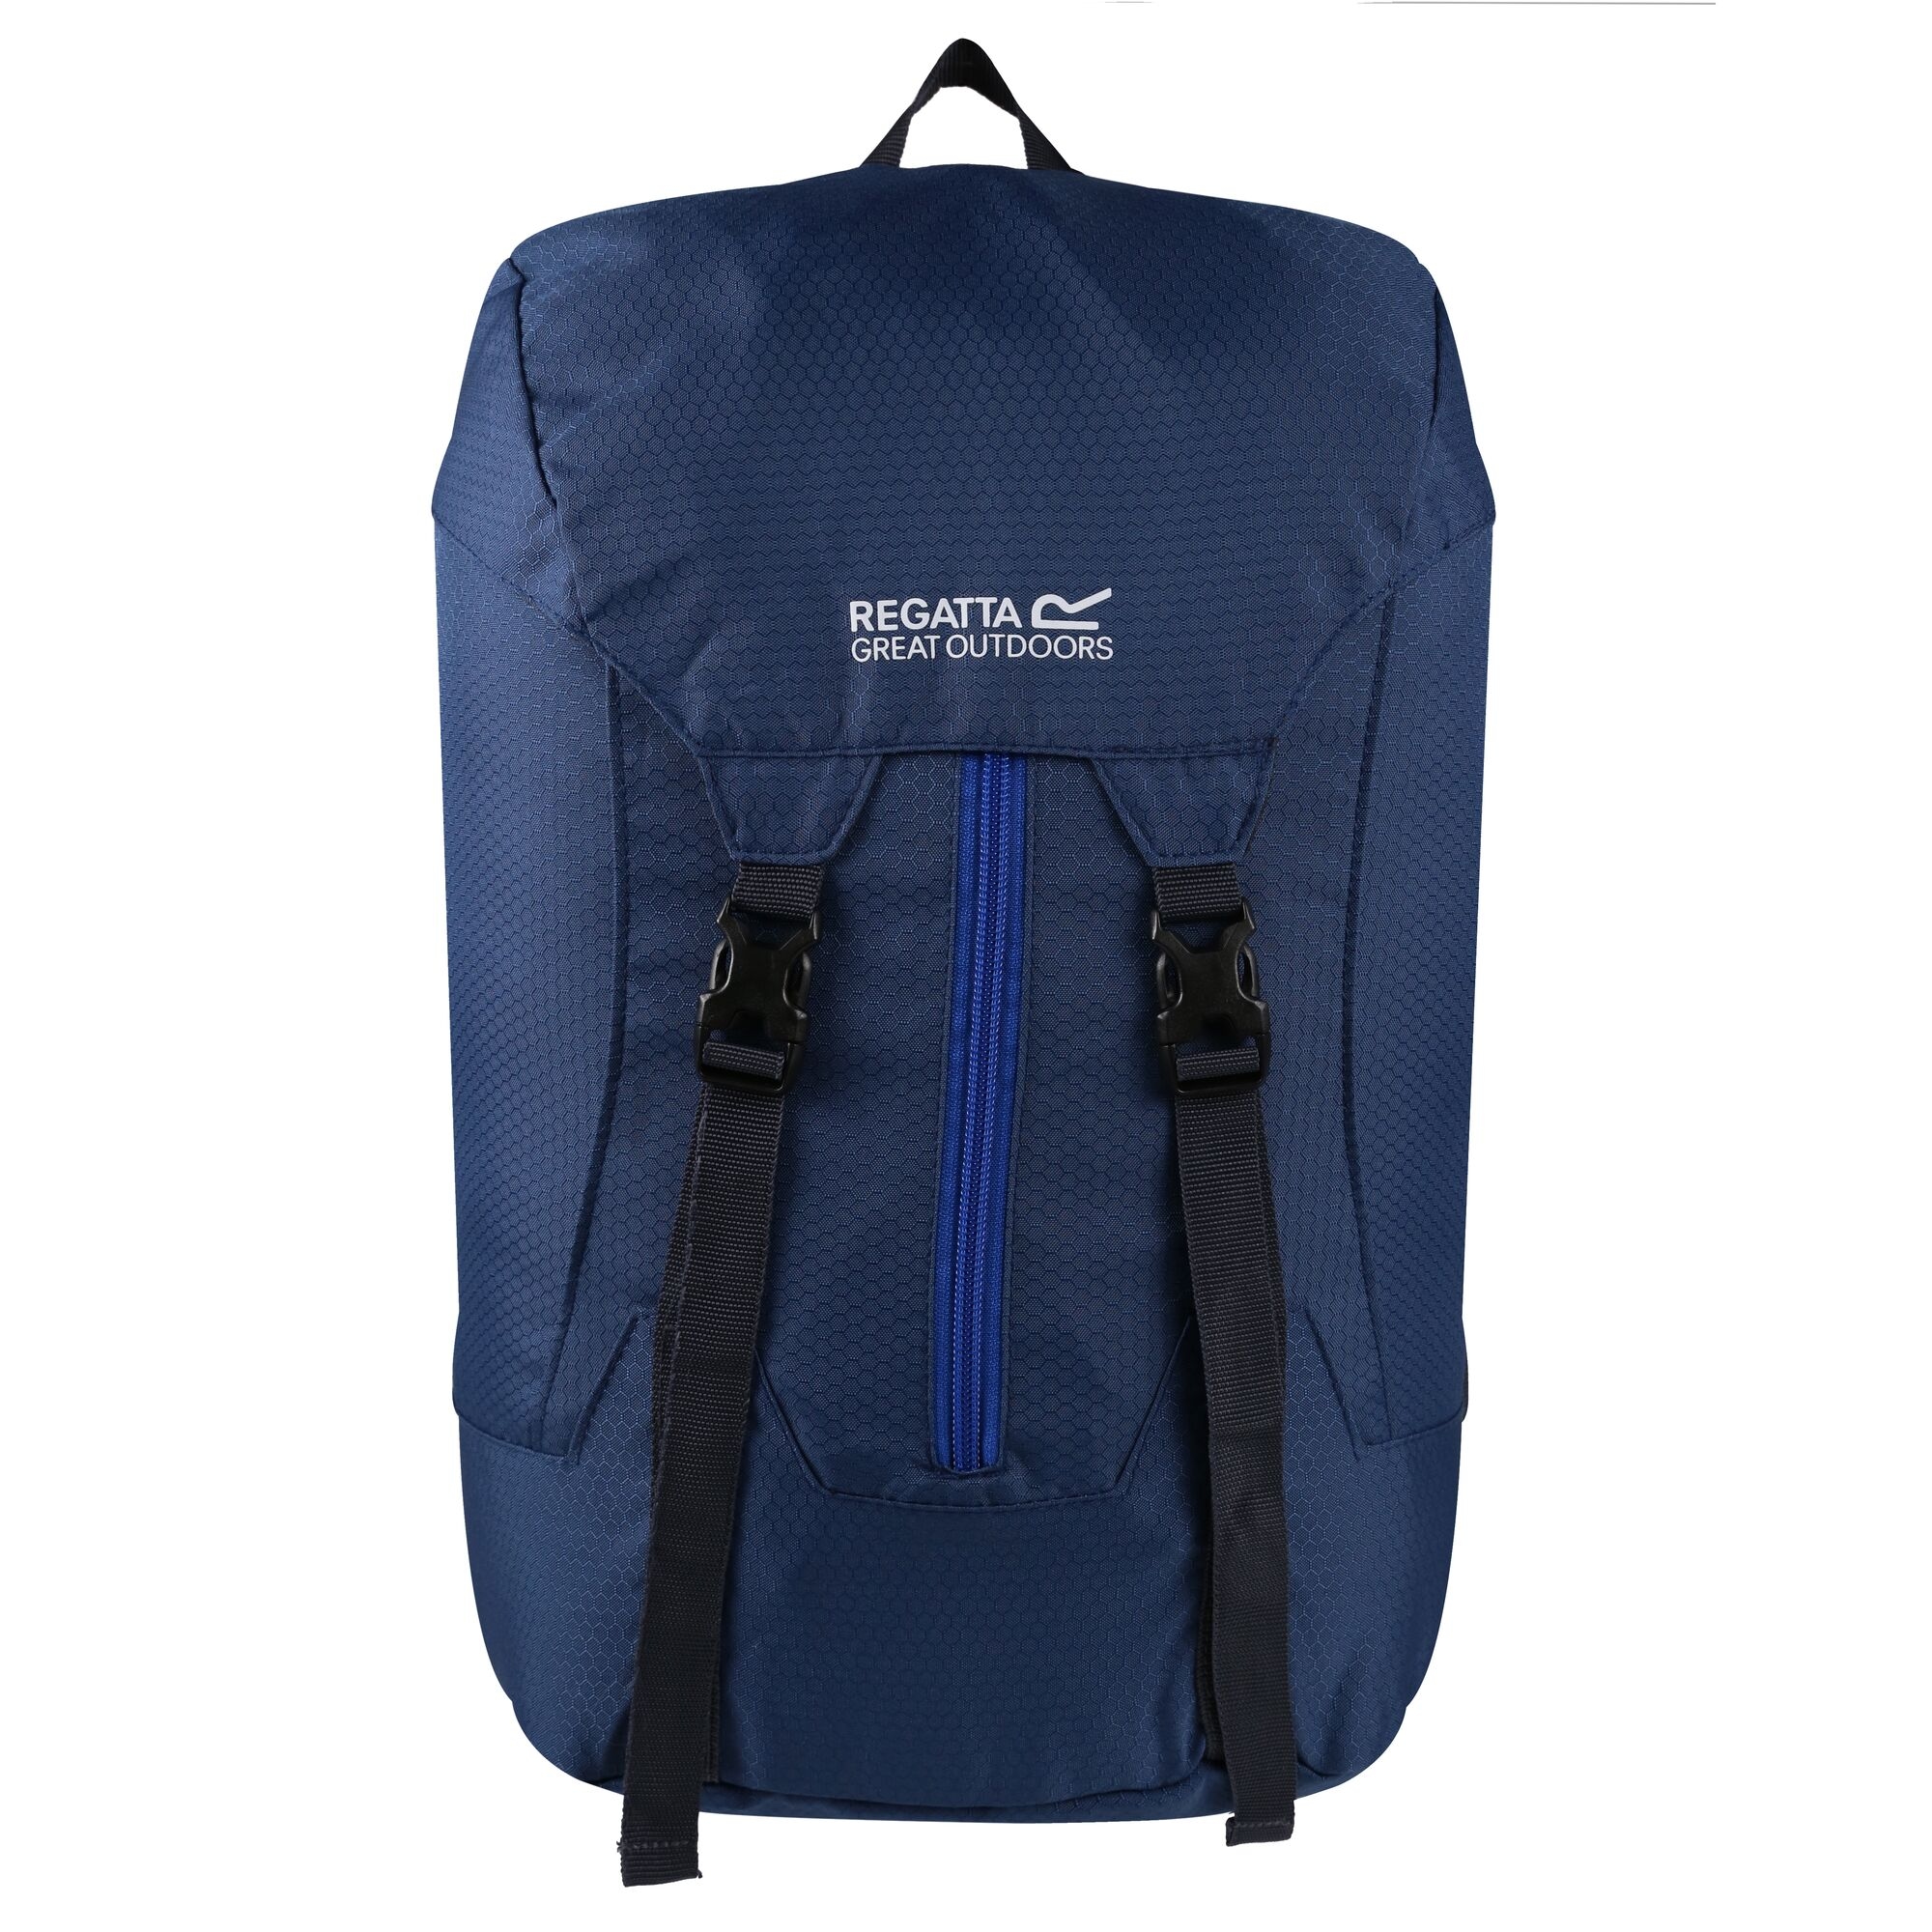 Regatta Easypack II 25L Packaway Backpack Dark Denim Nautical Blue, Size: Sgl